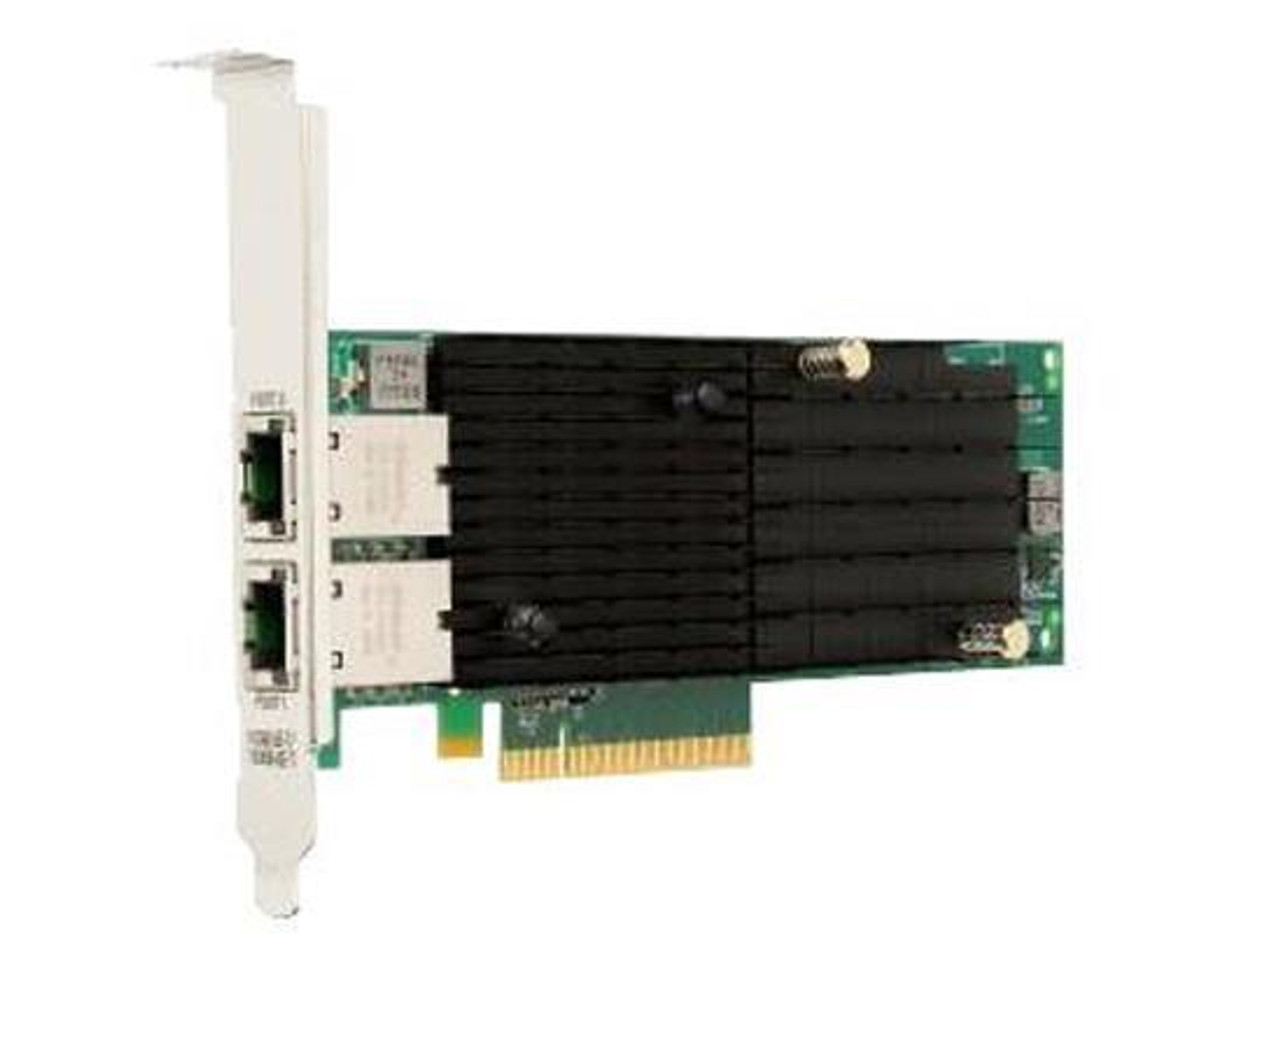 OCE14102B-UT Emulex Dual-Ports RJ-45 10Gbps 10GBase-T iSCSI/FCOE PCI Express 3.0 x8 Converged Network Adapter